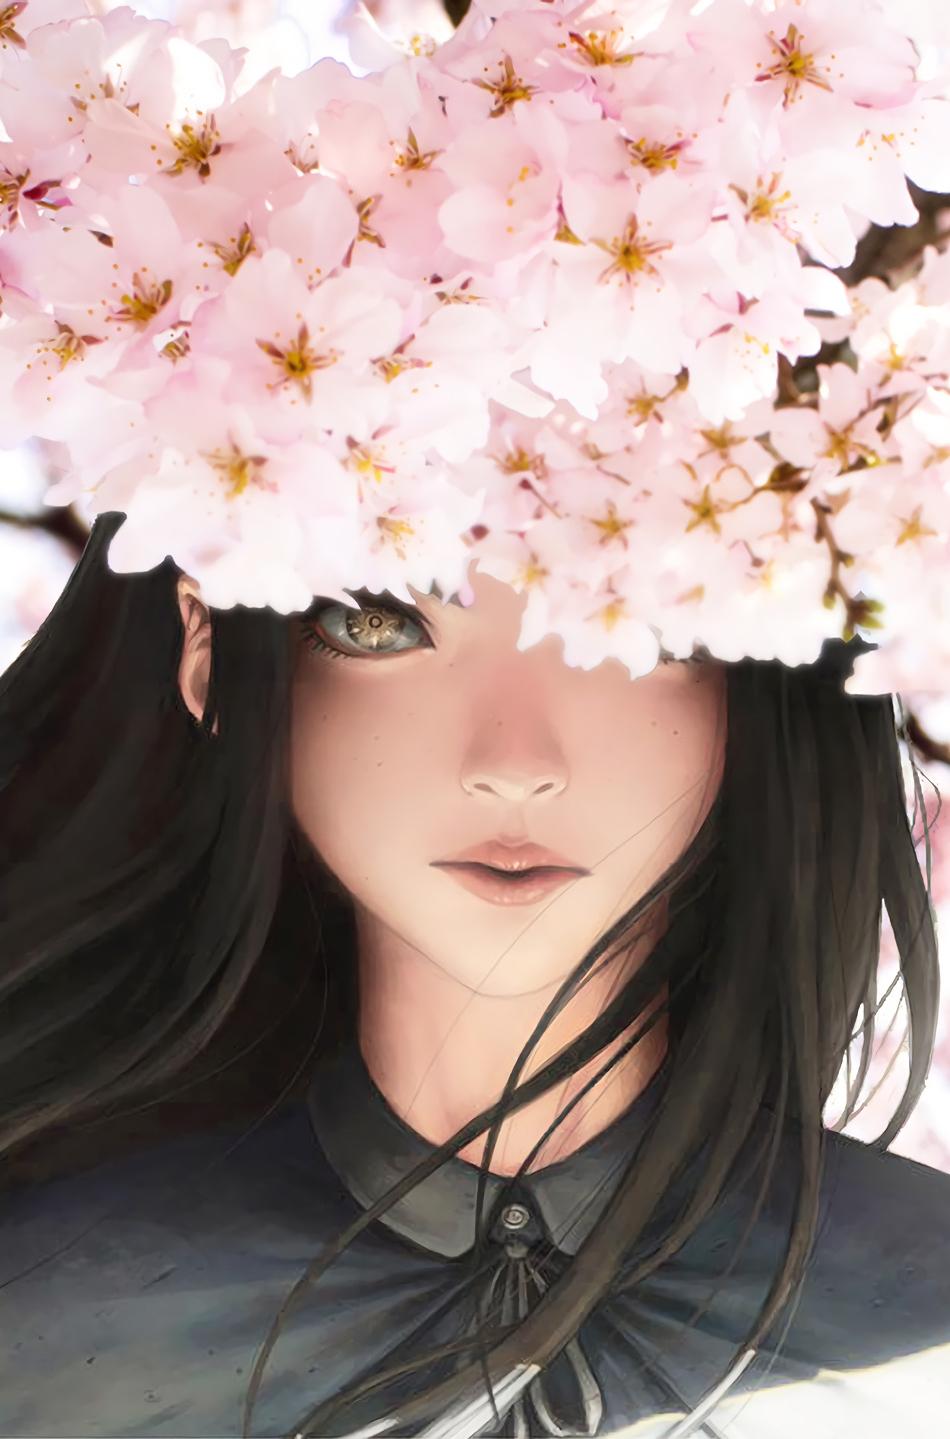 Wallpaper Anime Girl Original Cherry Blossom